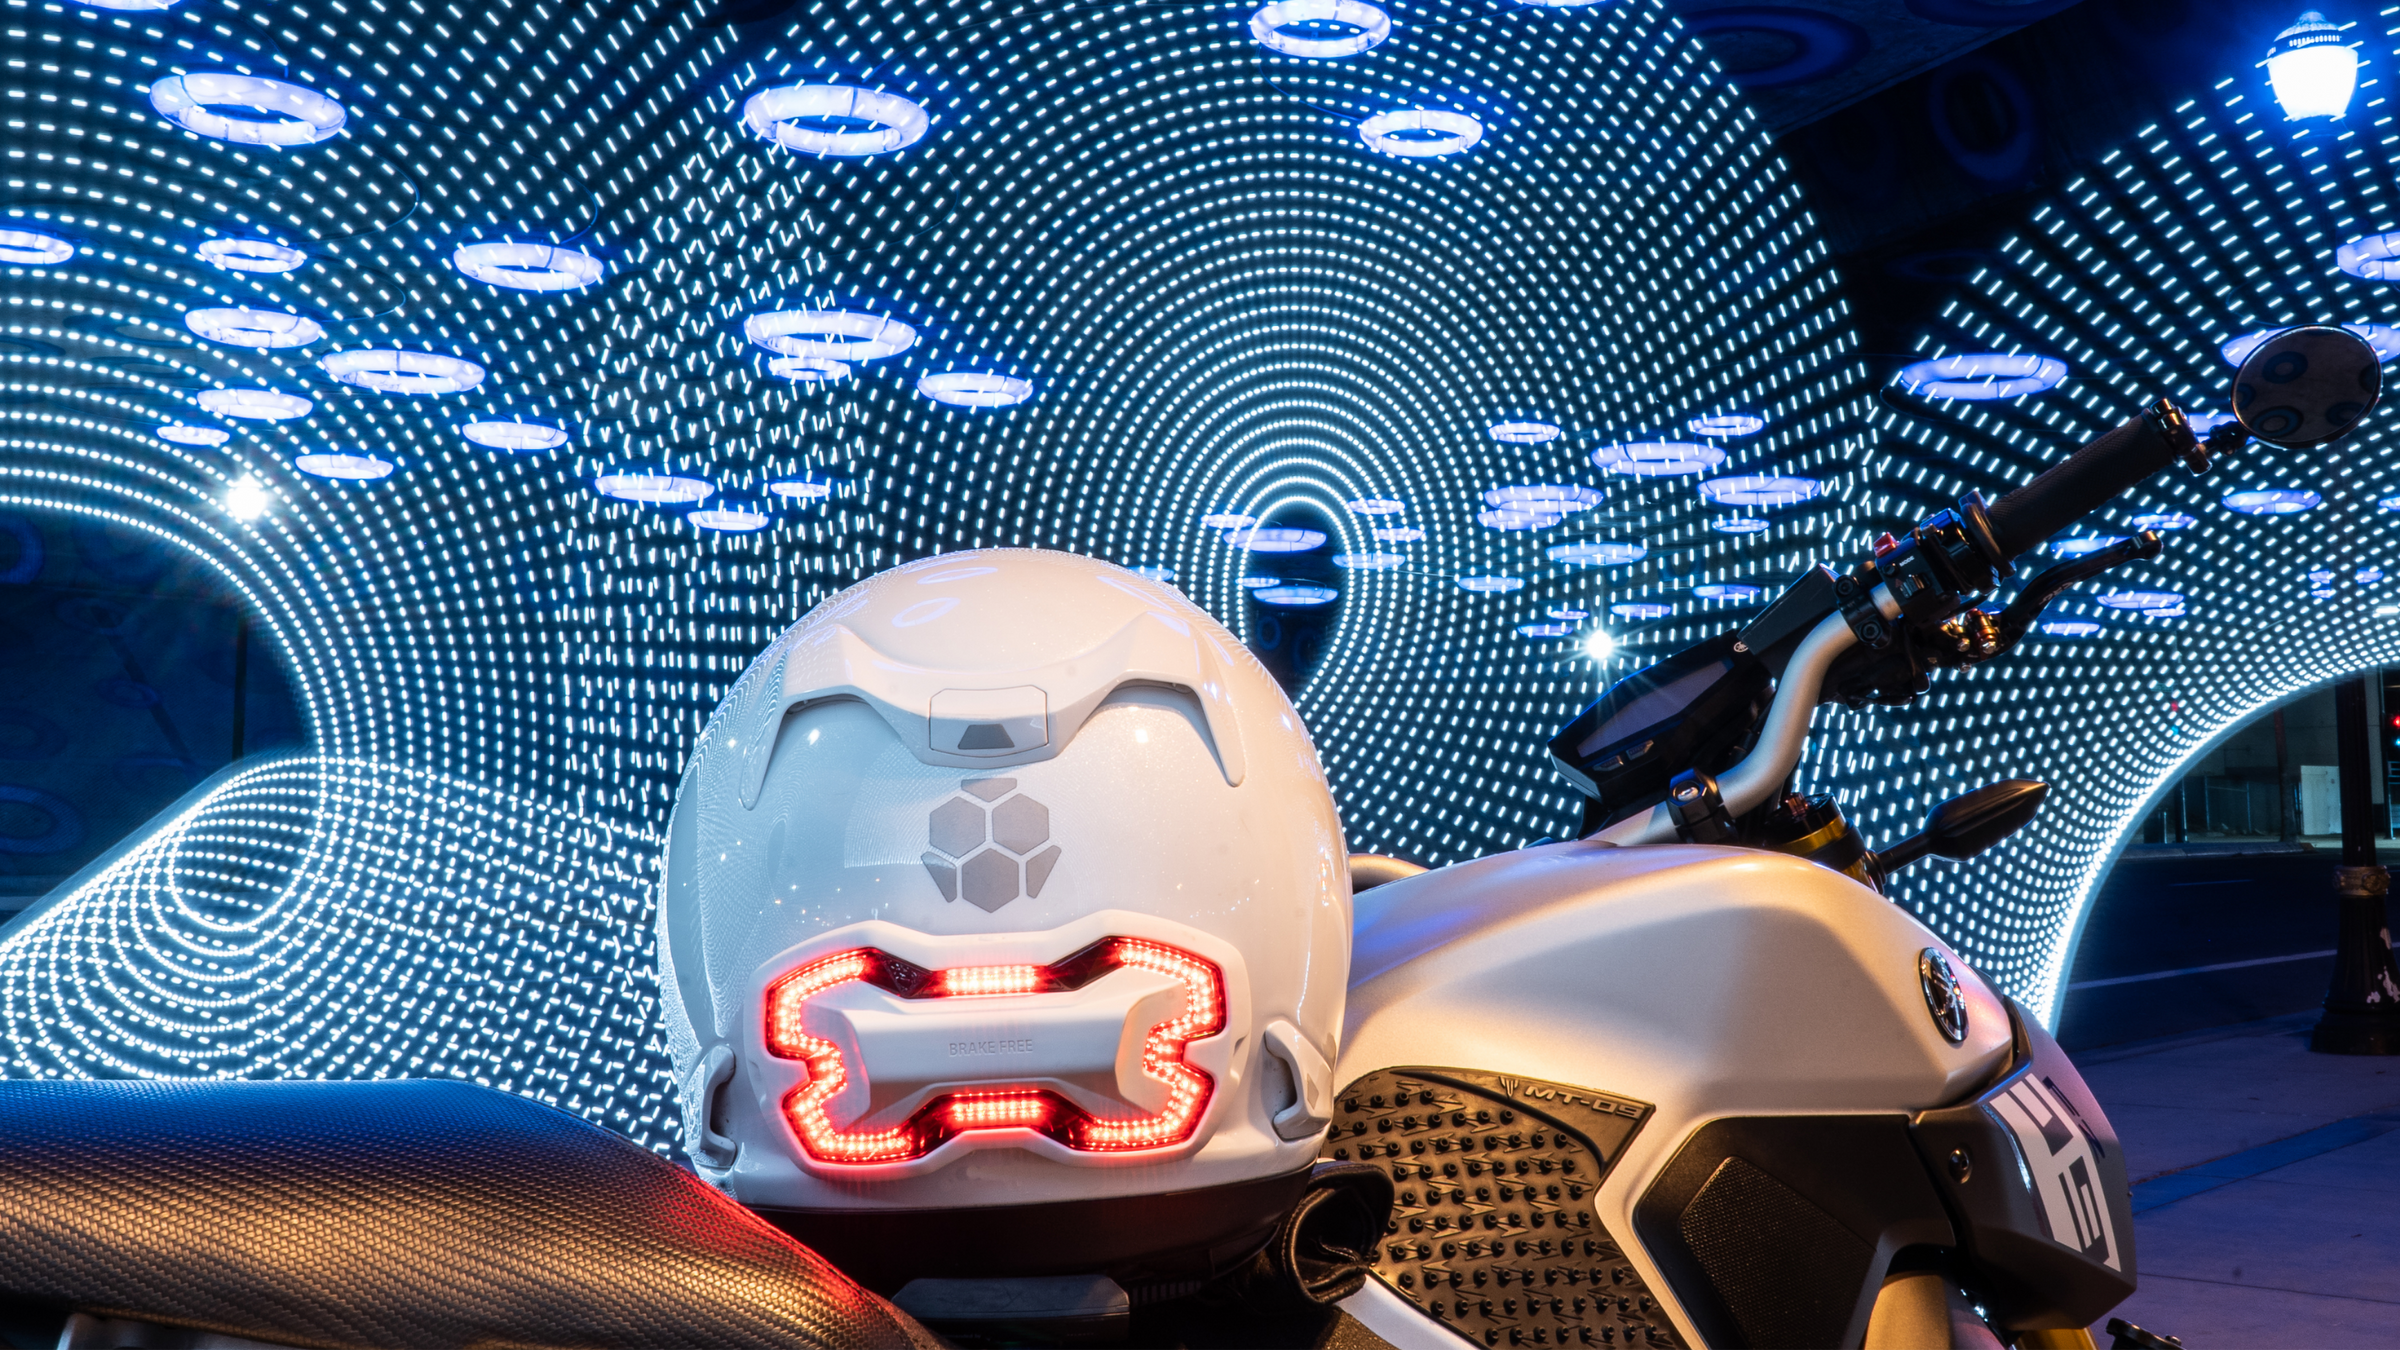 Brake Free smart wireless helmet brake light - now in a stunning white colorway